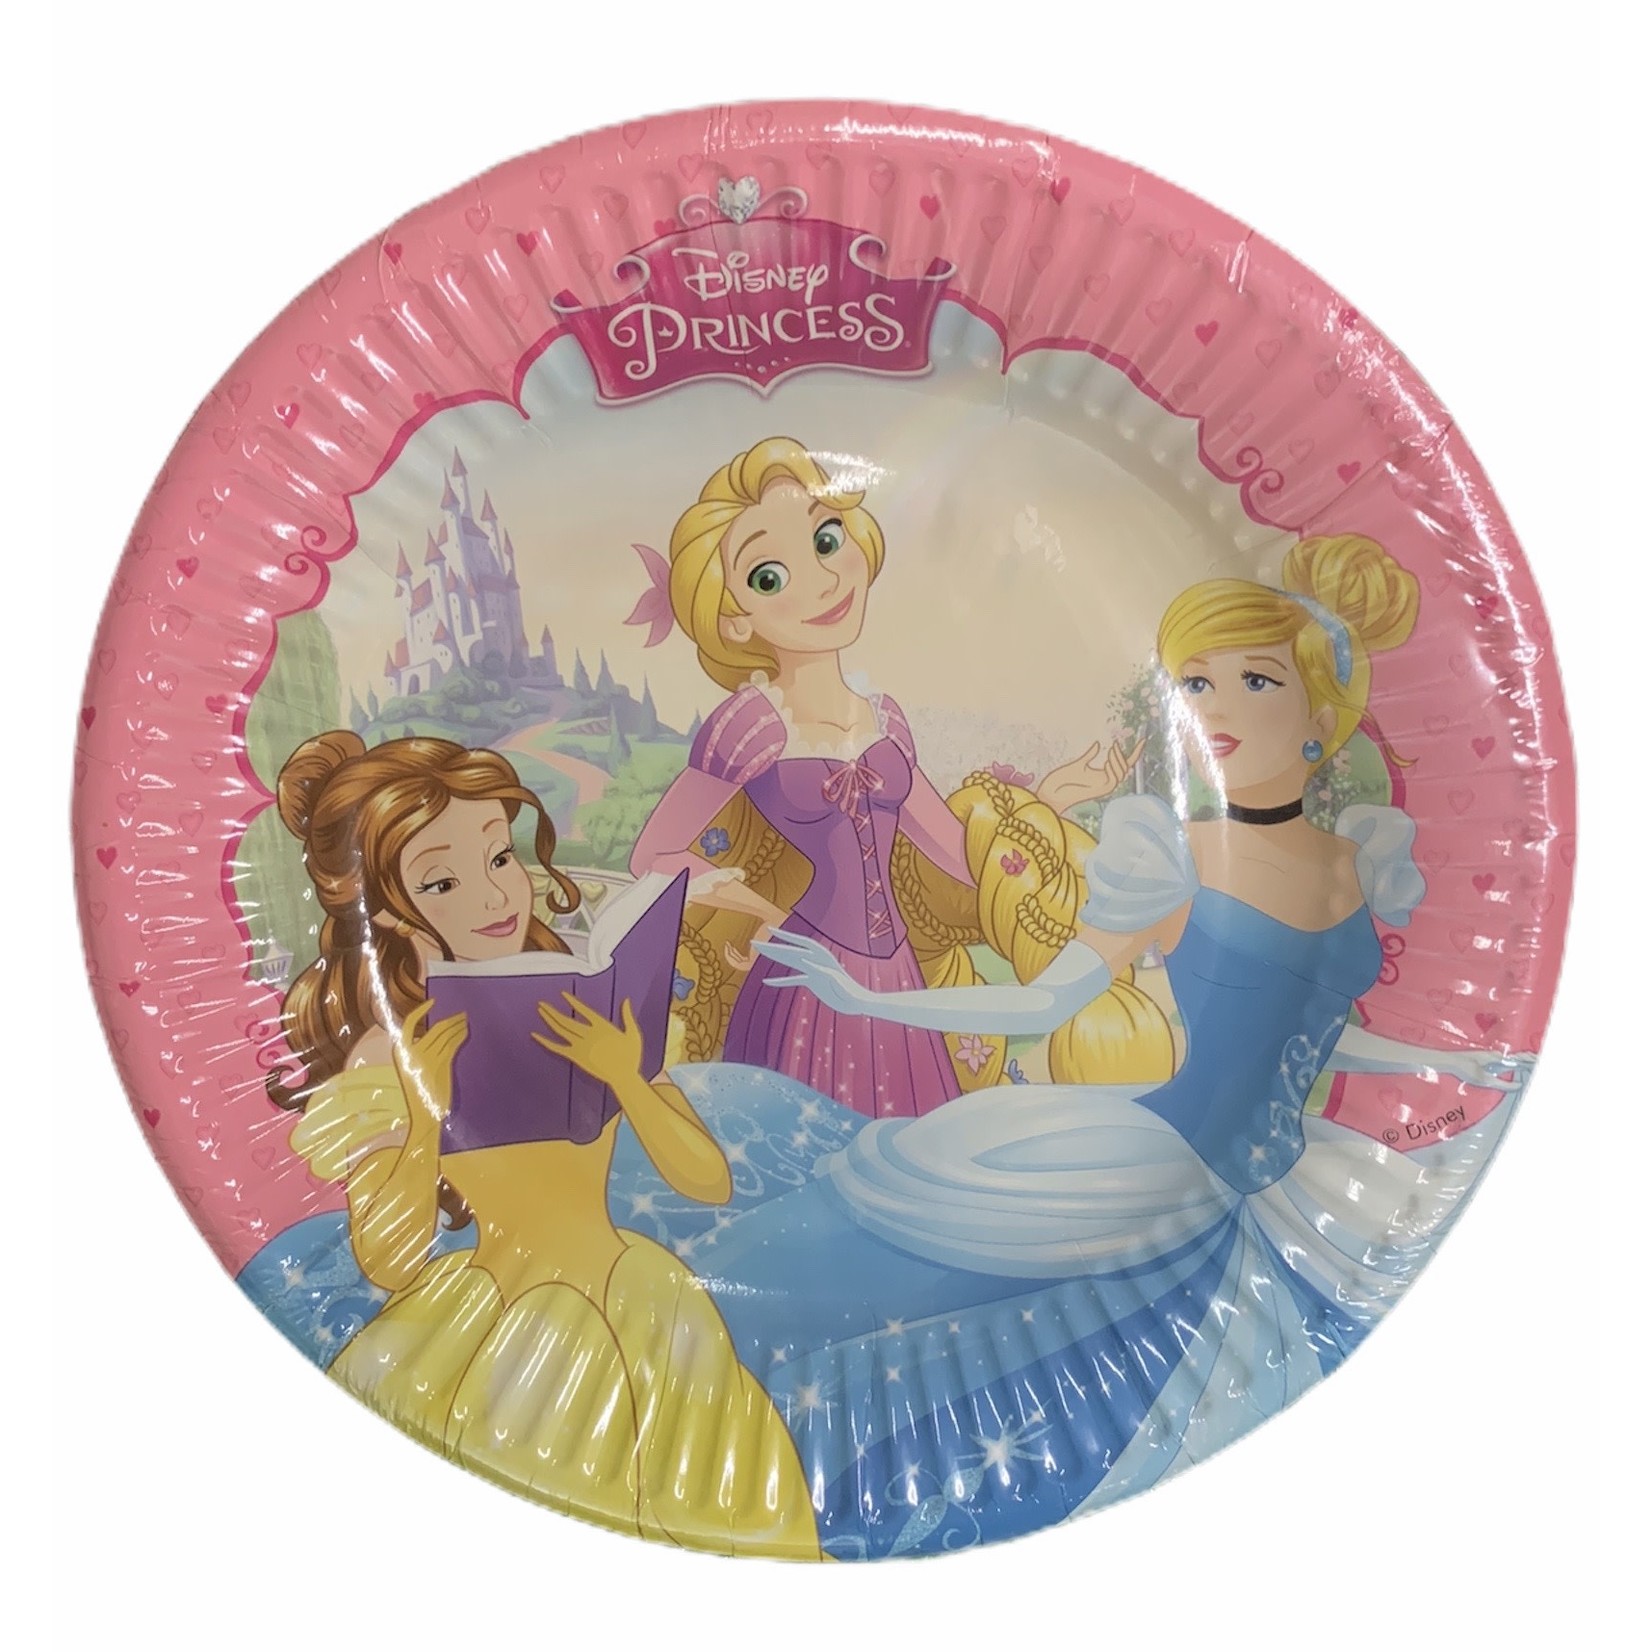 Disney Disney’s Princess - 8 x 19.5 cm Round Paper Plates